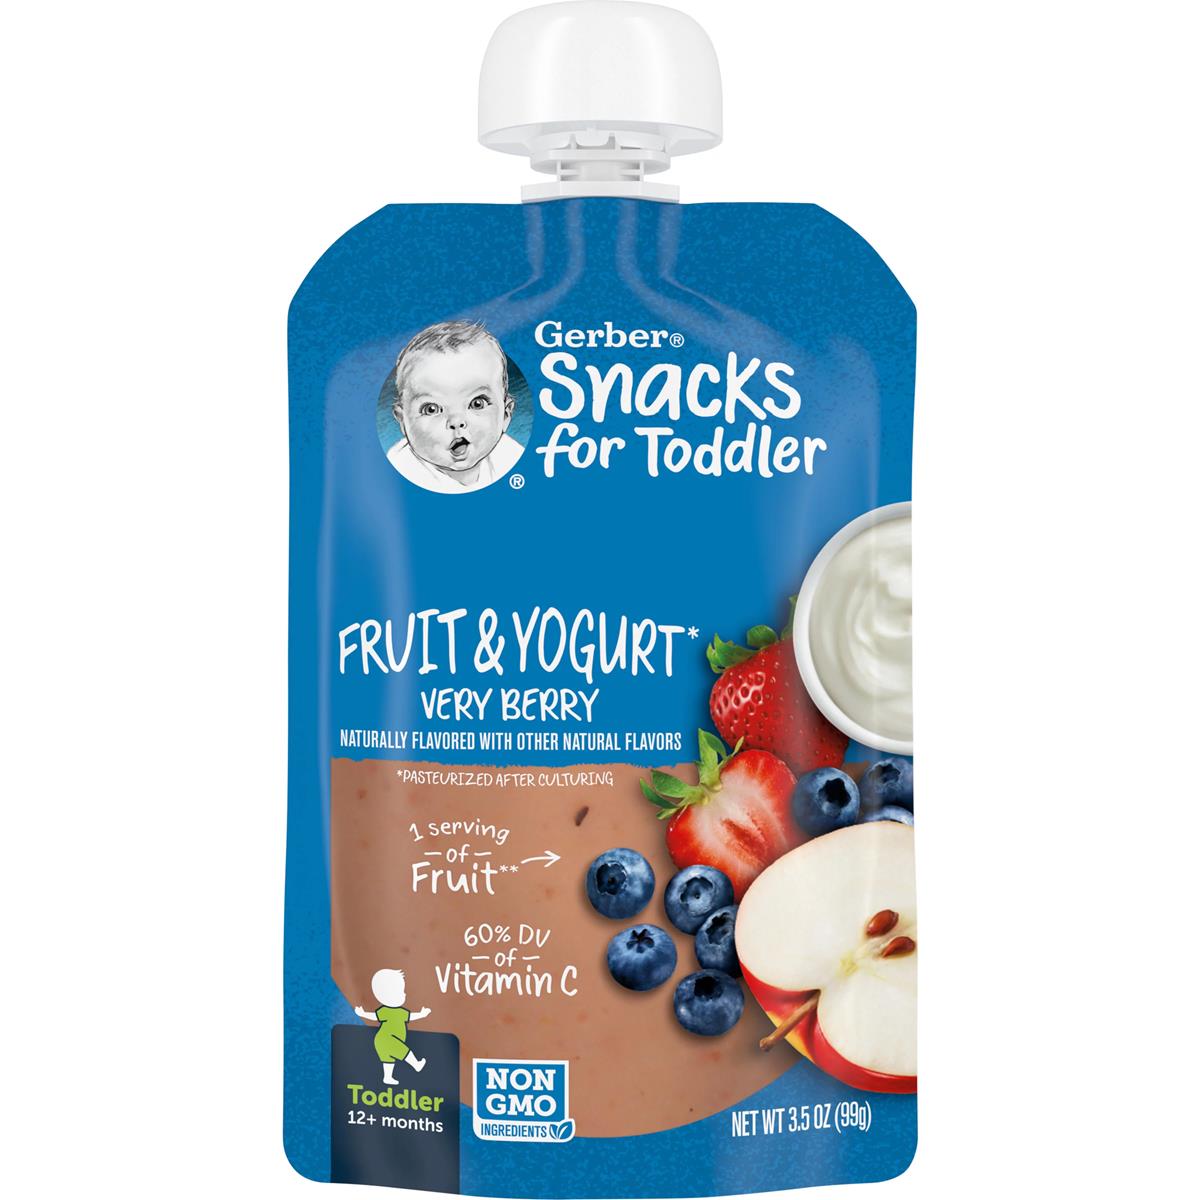 Gerber Snacks For Toddler Fruit & Yogurt Very Berry - 99g